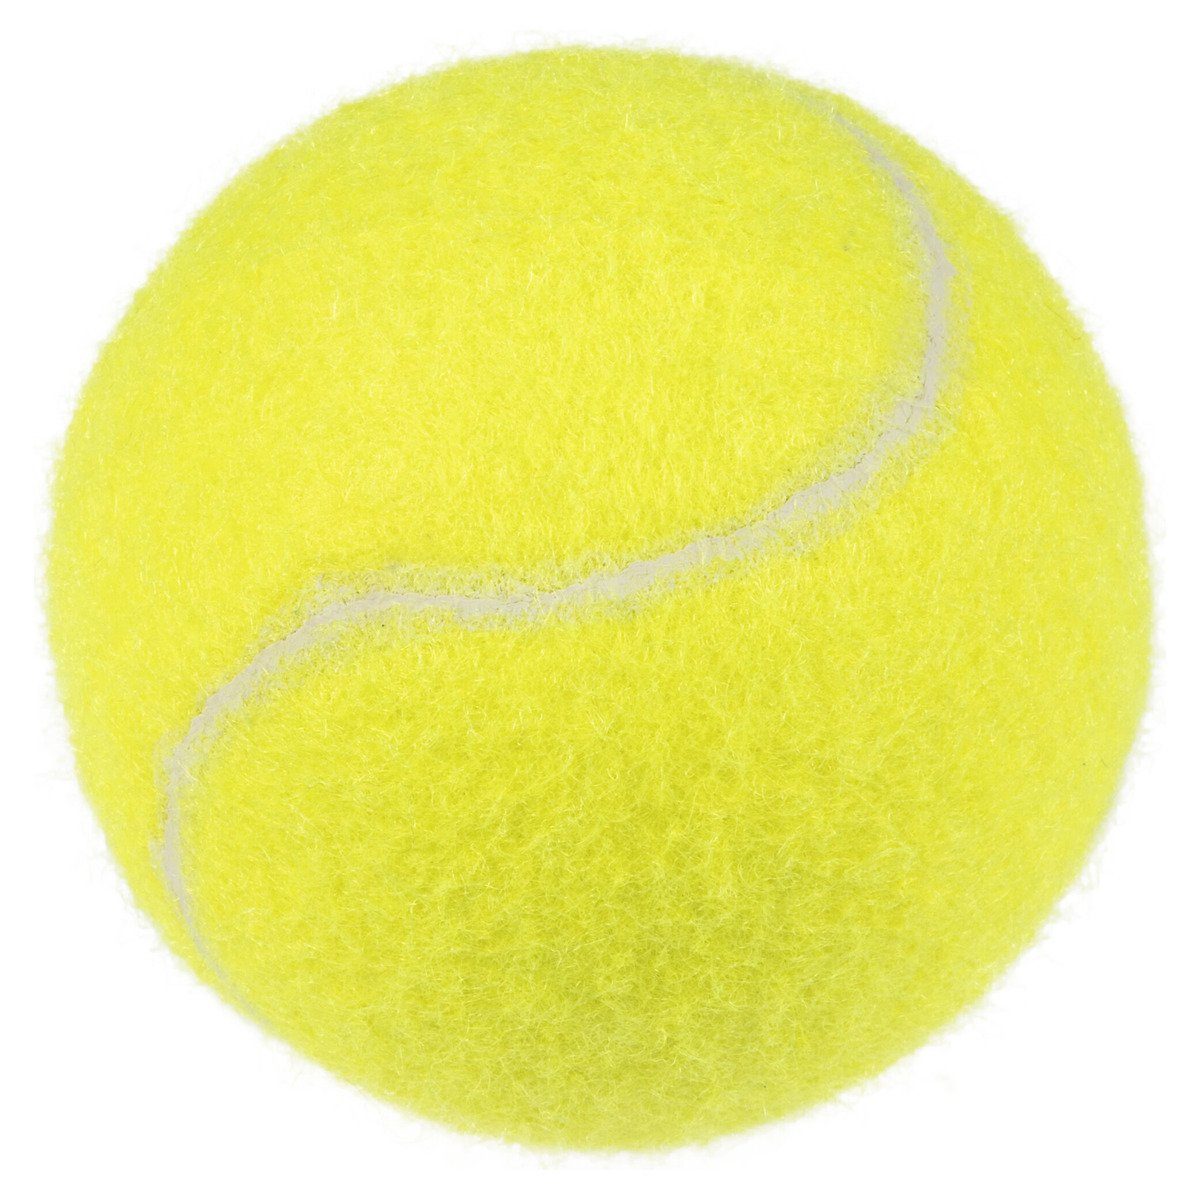 Tennisball Spielball Flamingo Hundespielzeug gelb Smash